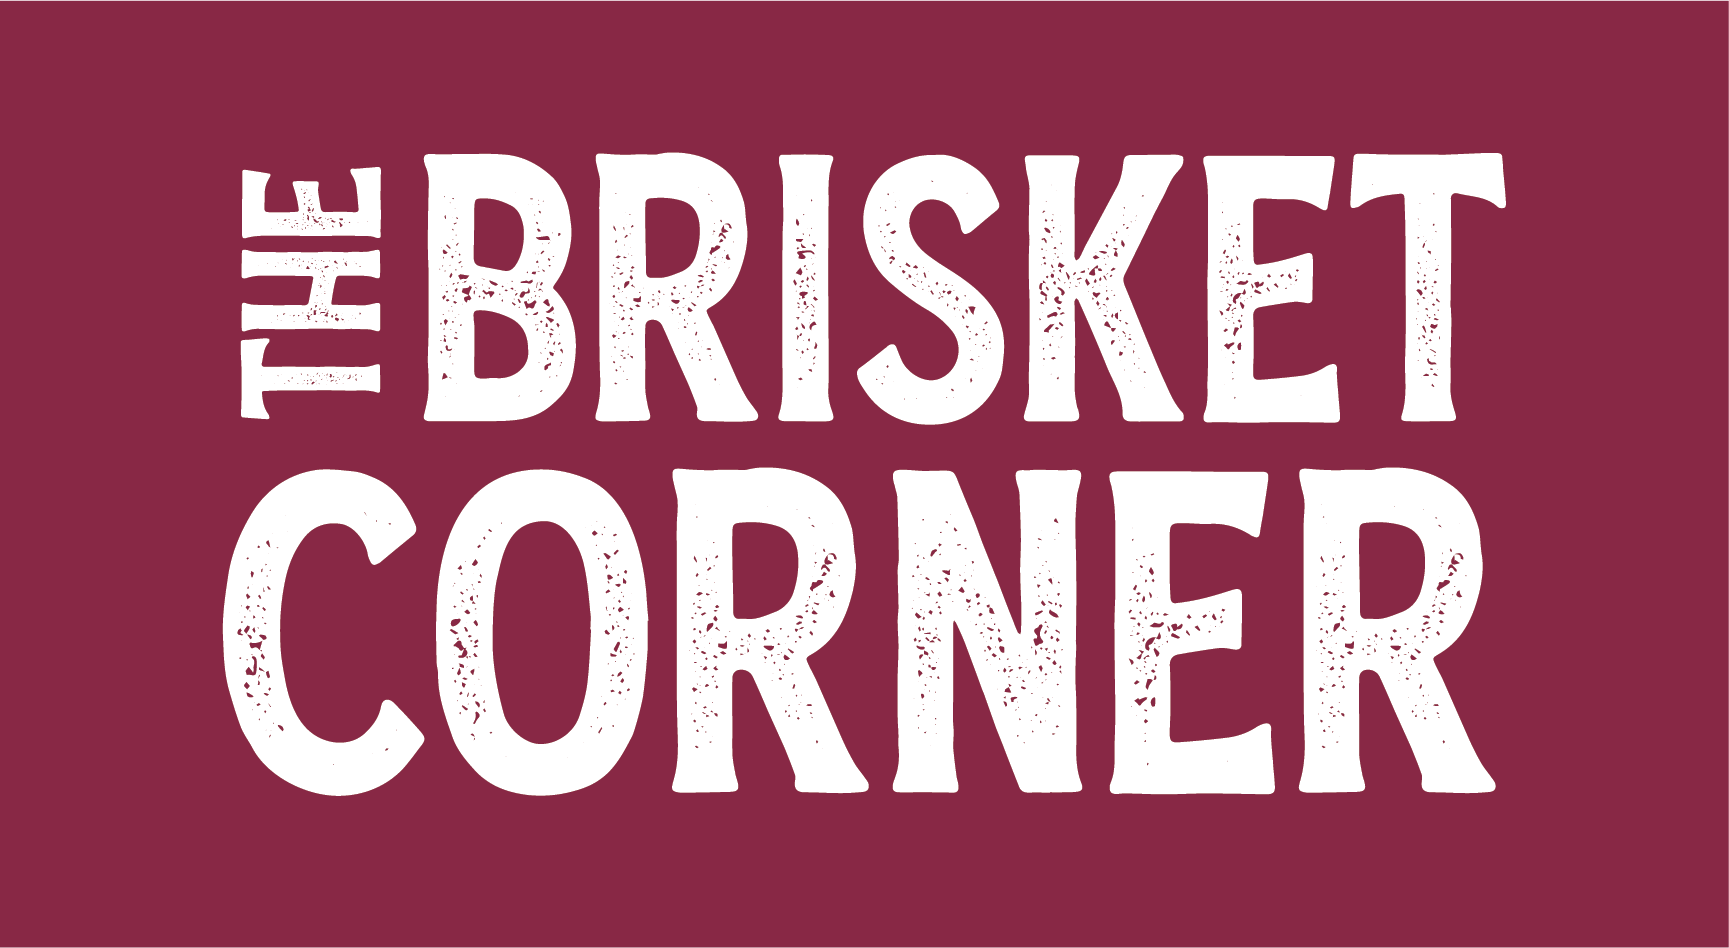 The Brisket Corner